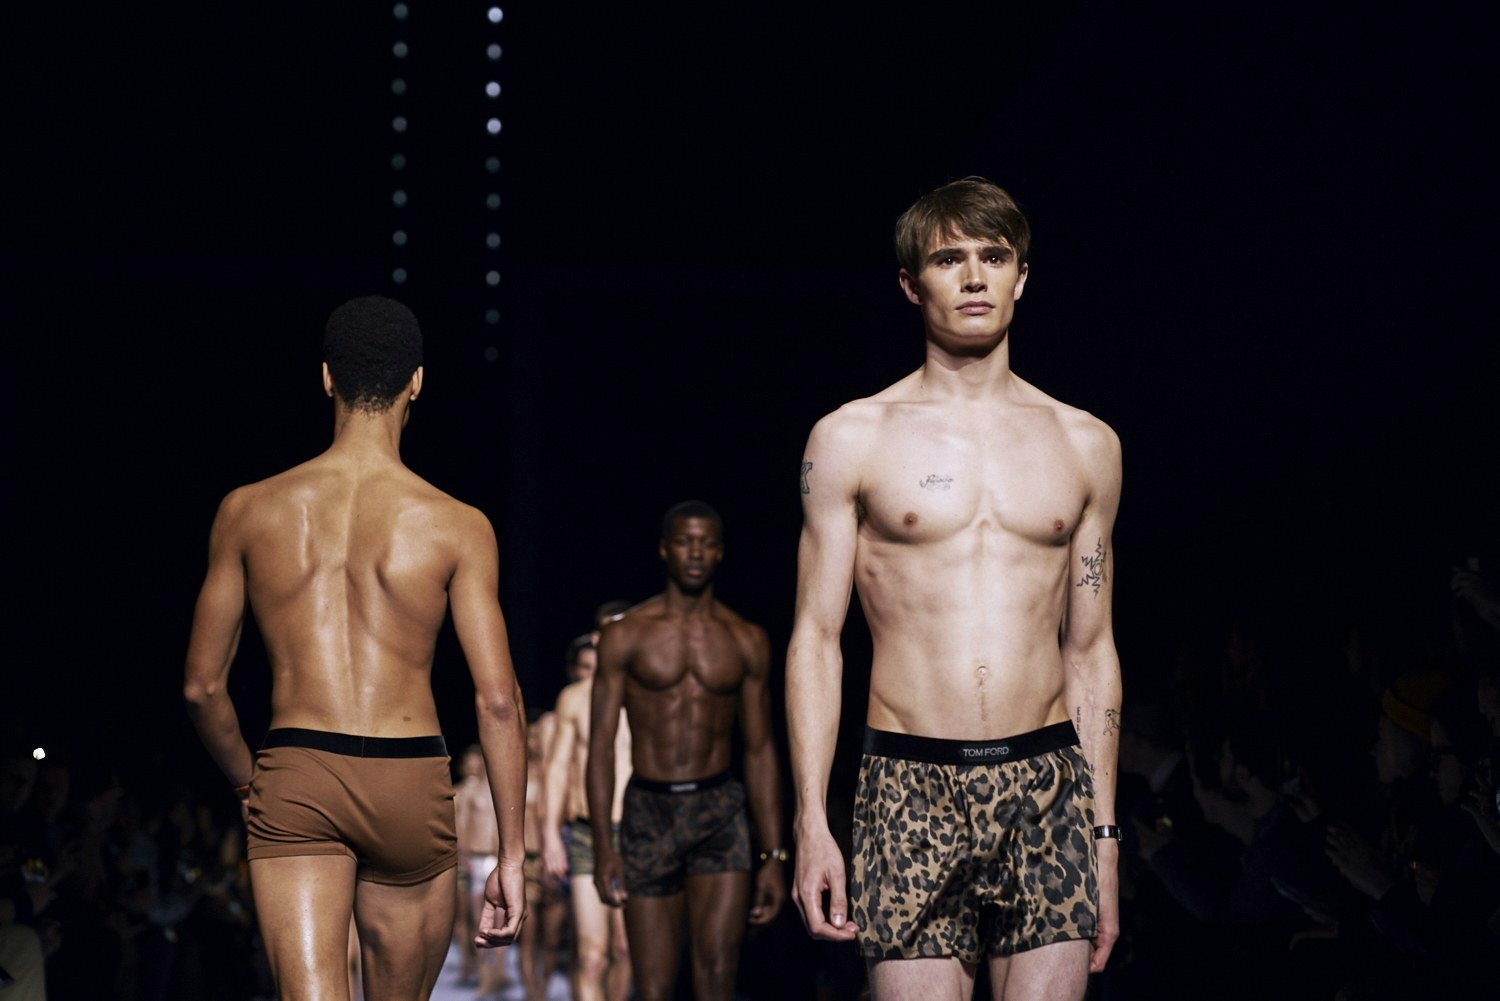 Tom Ford Introduced Underwear With Socks at Fashion Week